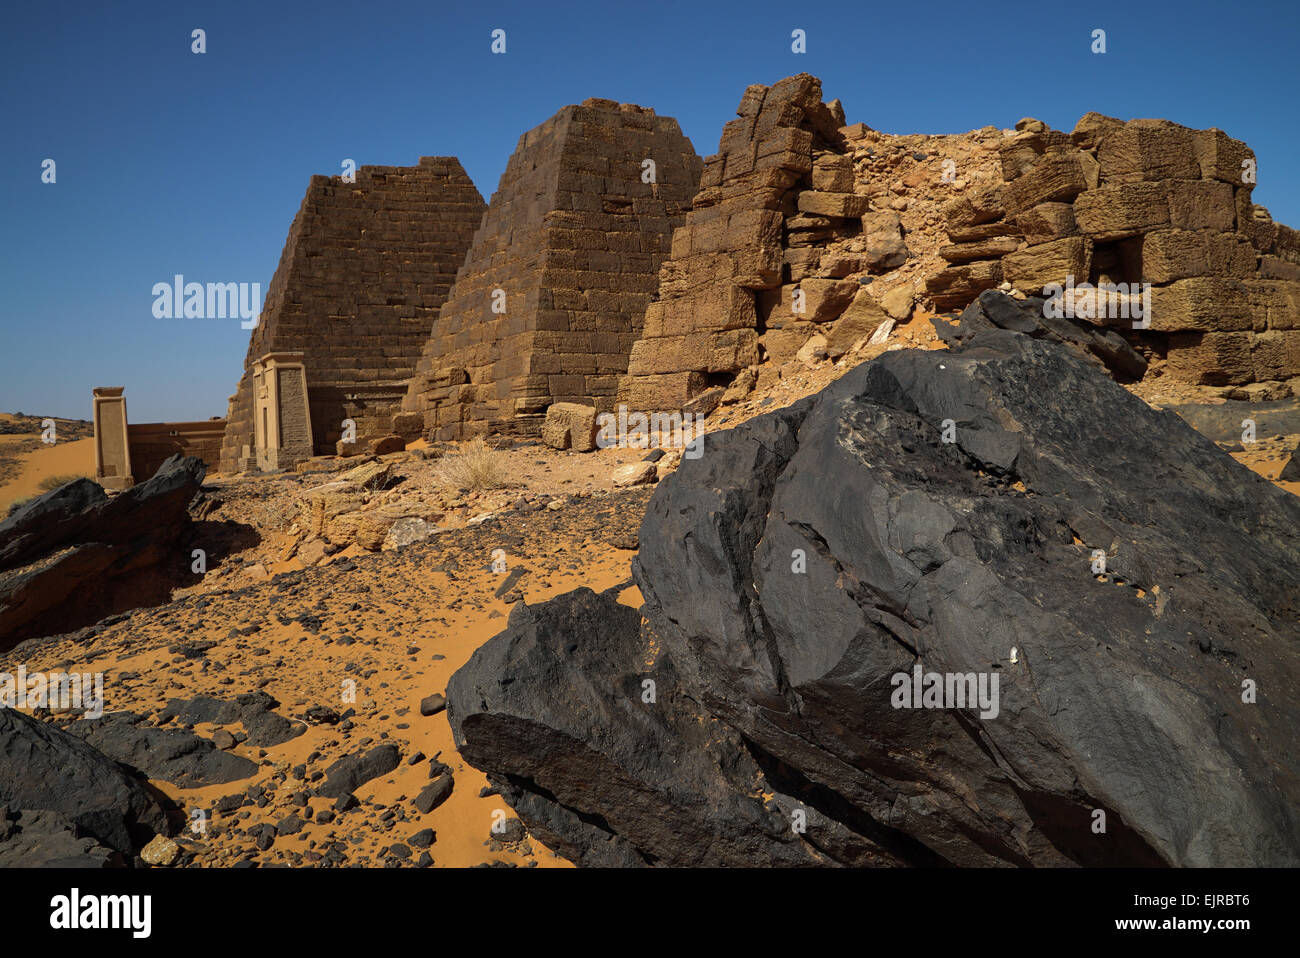 The Nubian Meroe Pyramids of Sudan Stock Photo